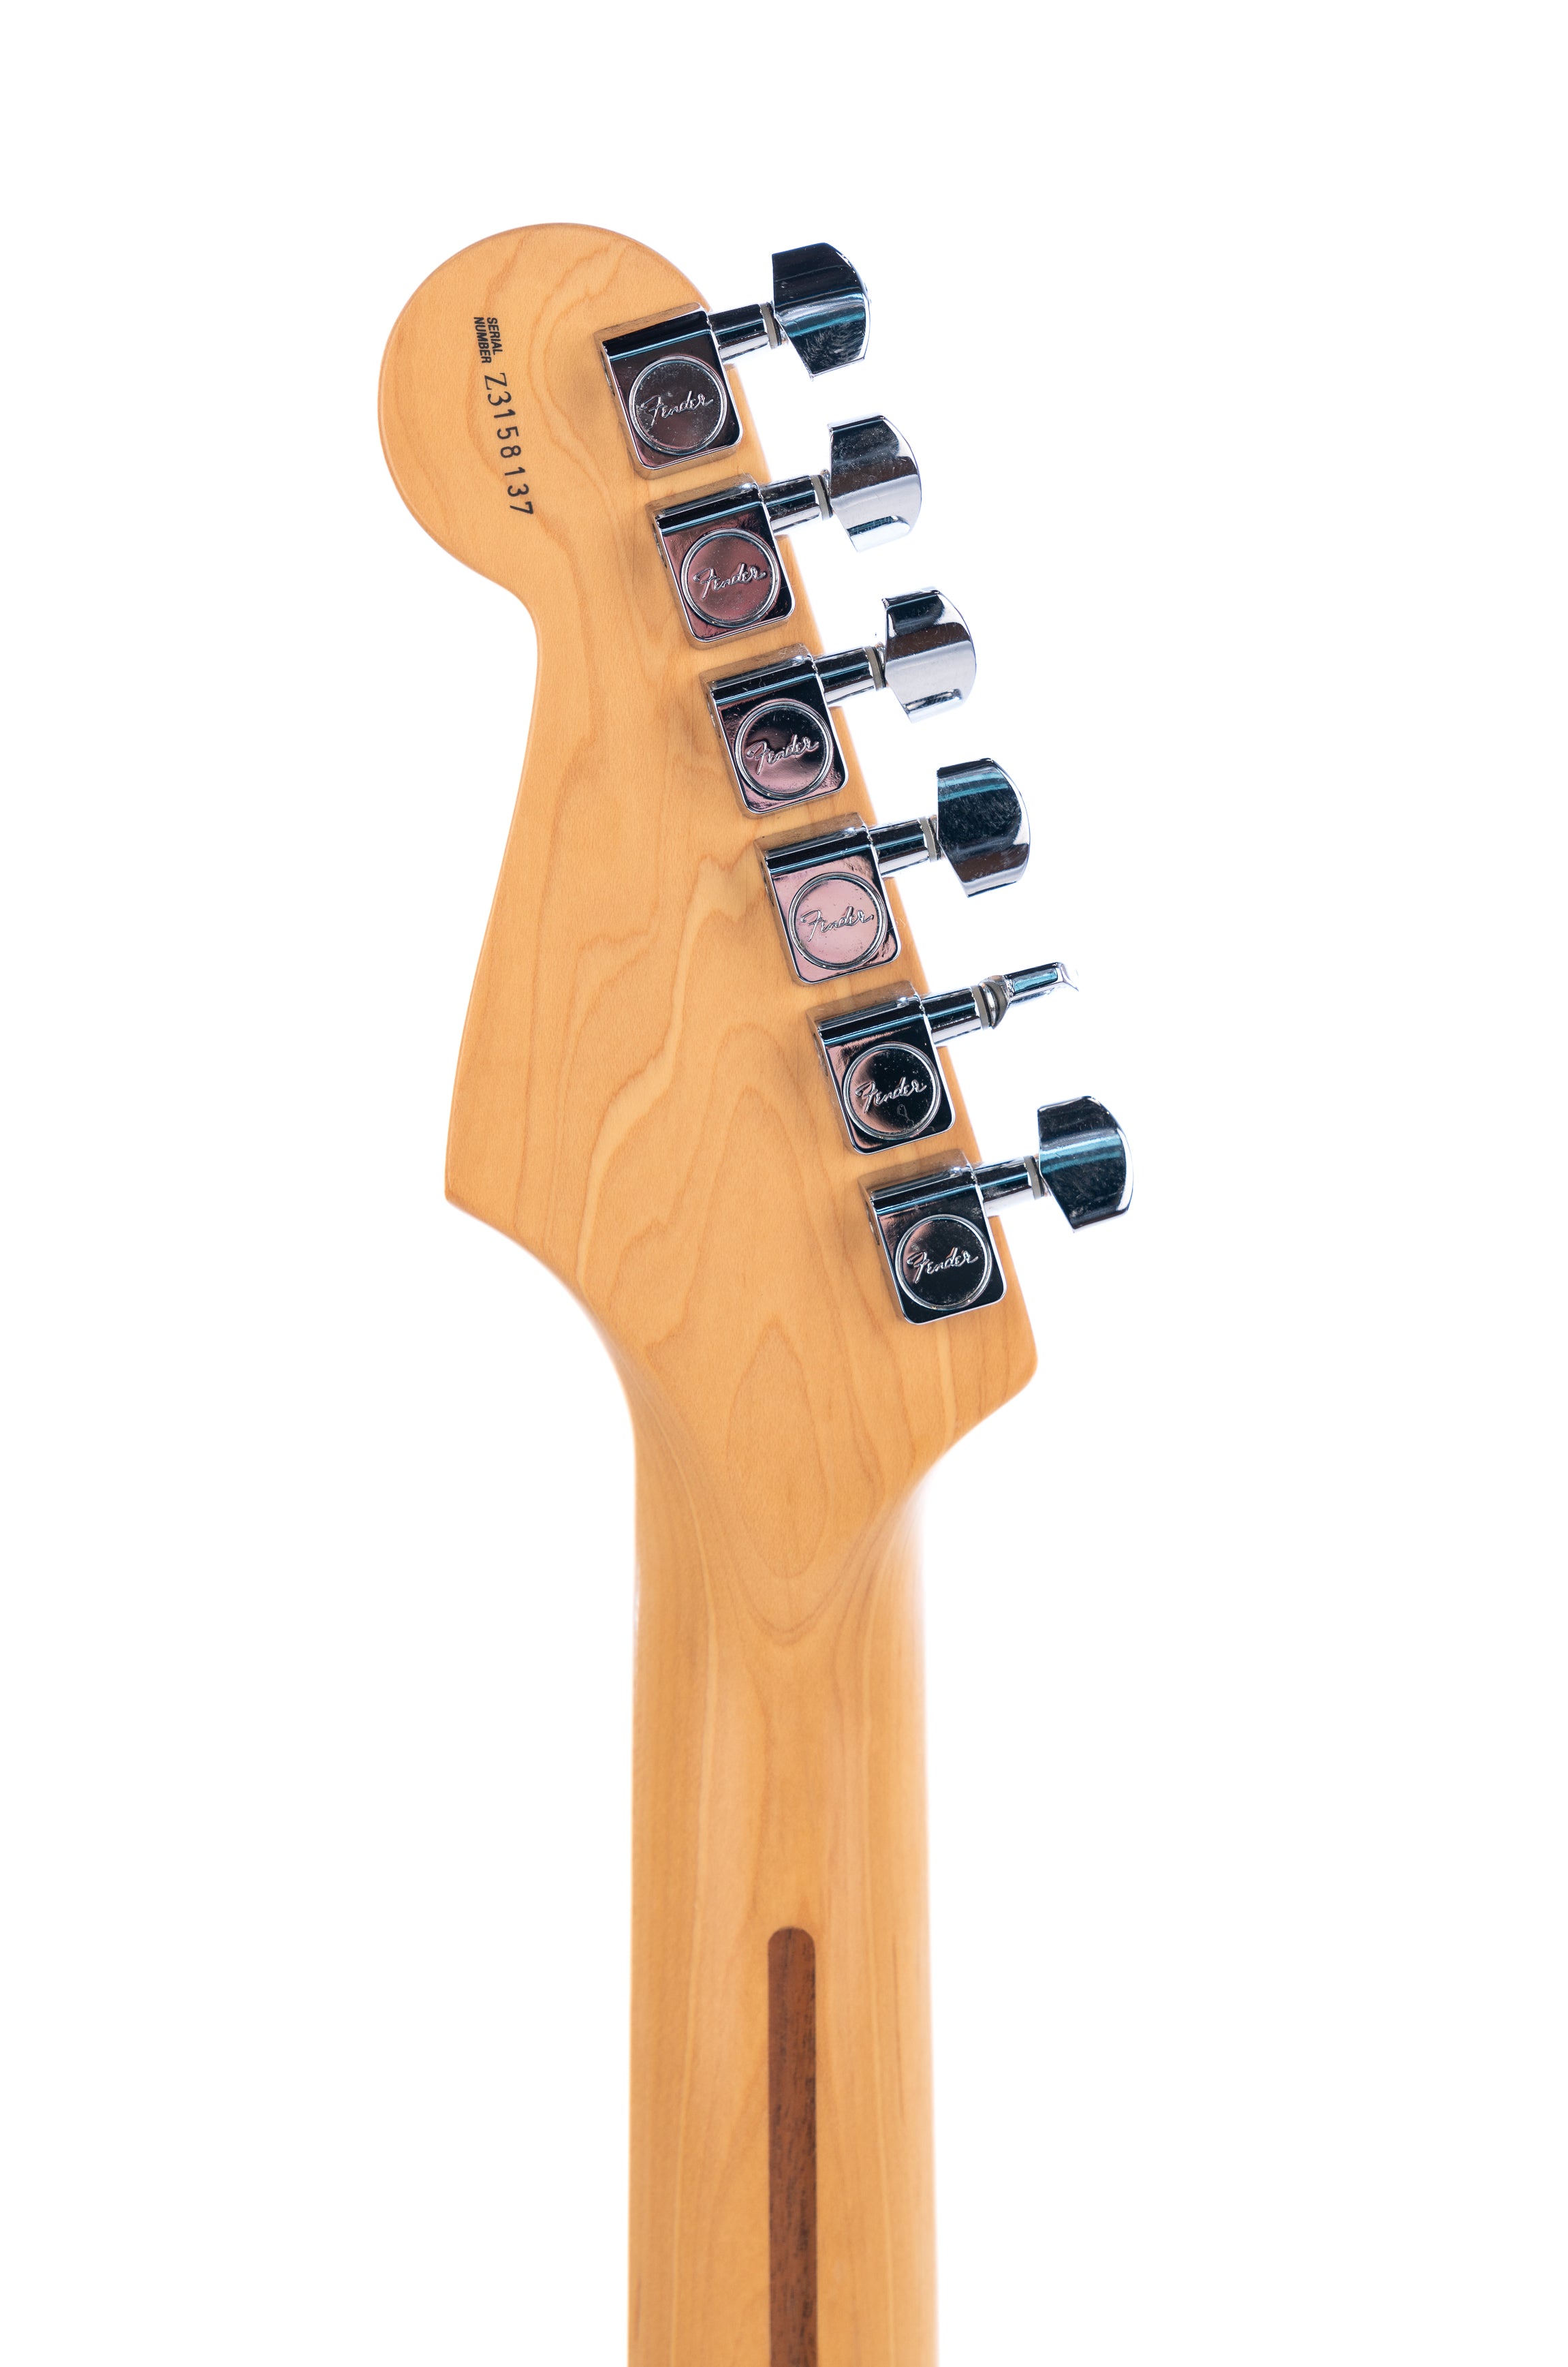 2003 Fender Highway One Stratocaster in Transparent Satin Blue